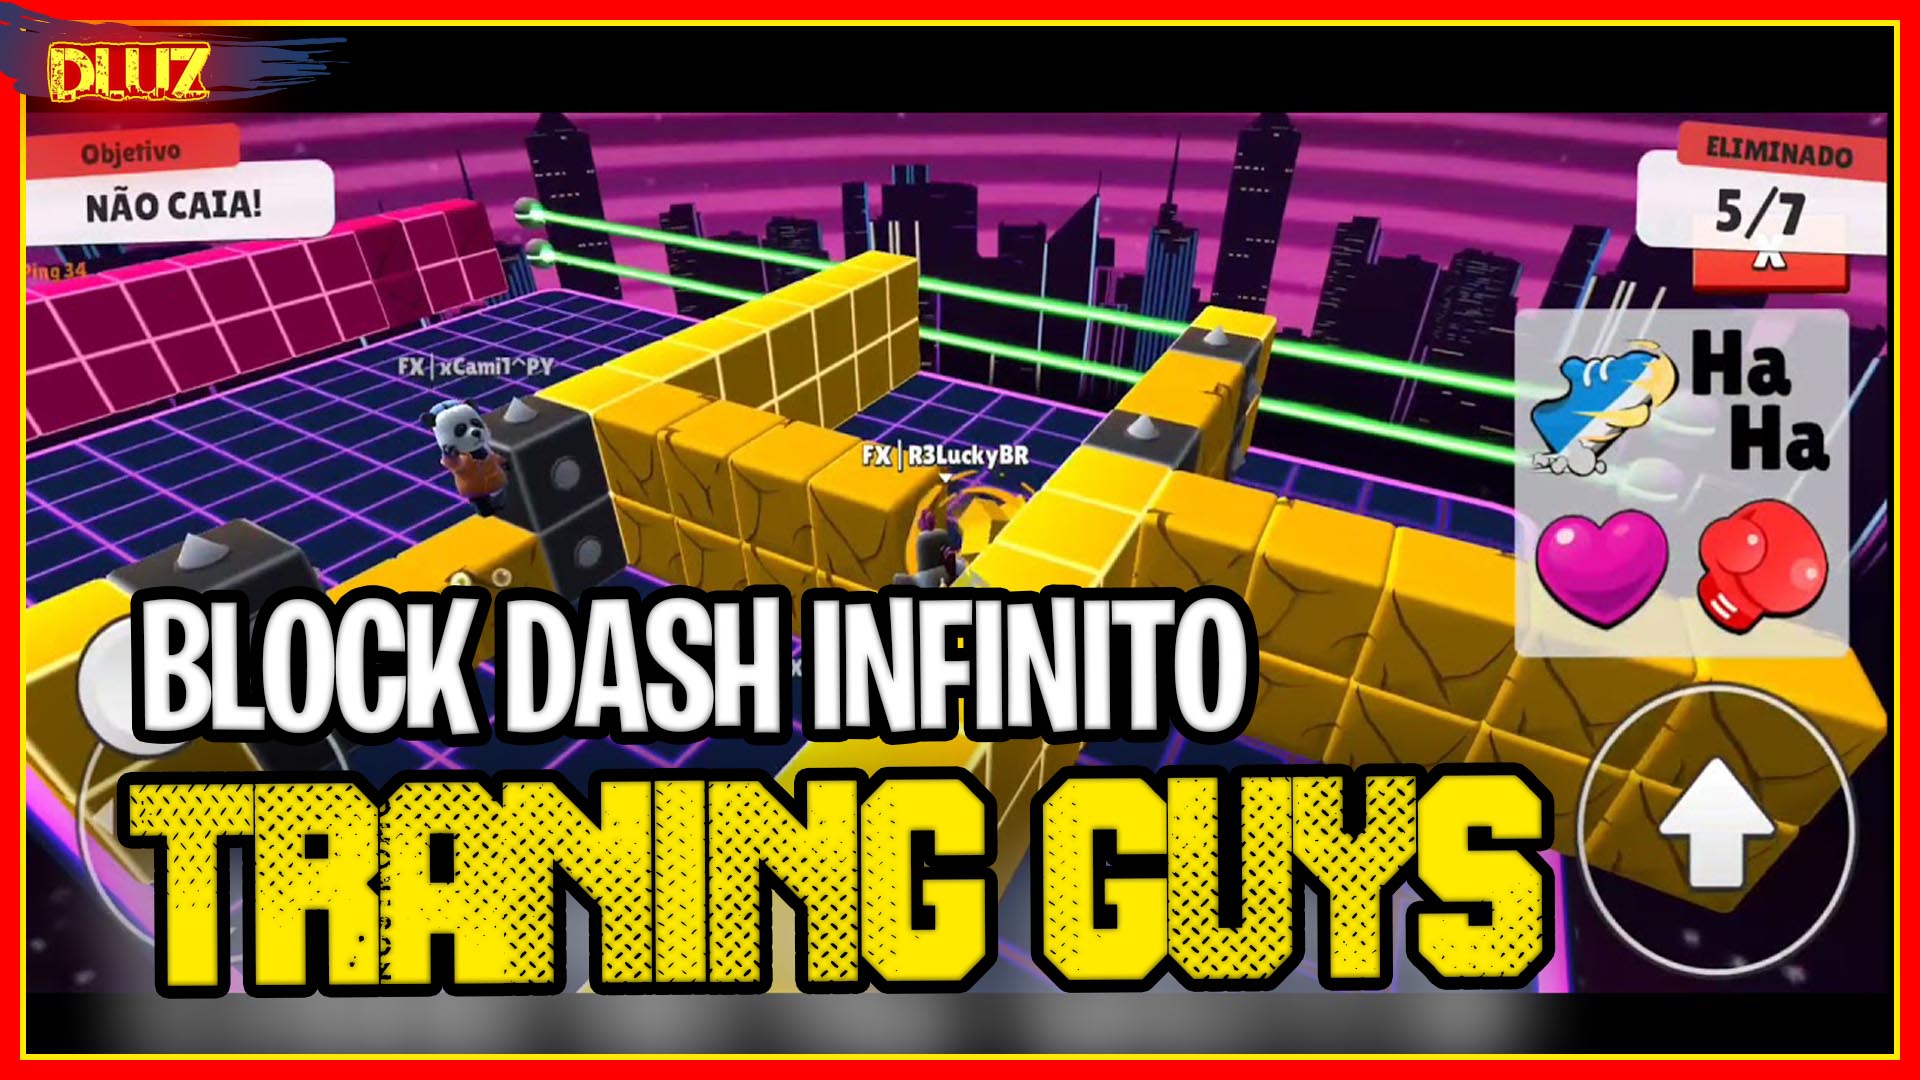 Training Guys - Servidor de Block Dash Infinito do Stumble Guys